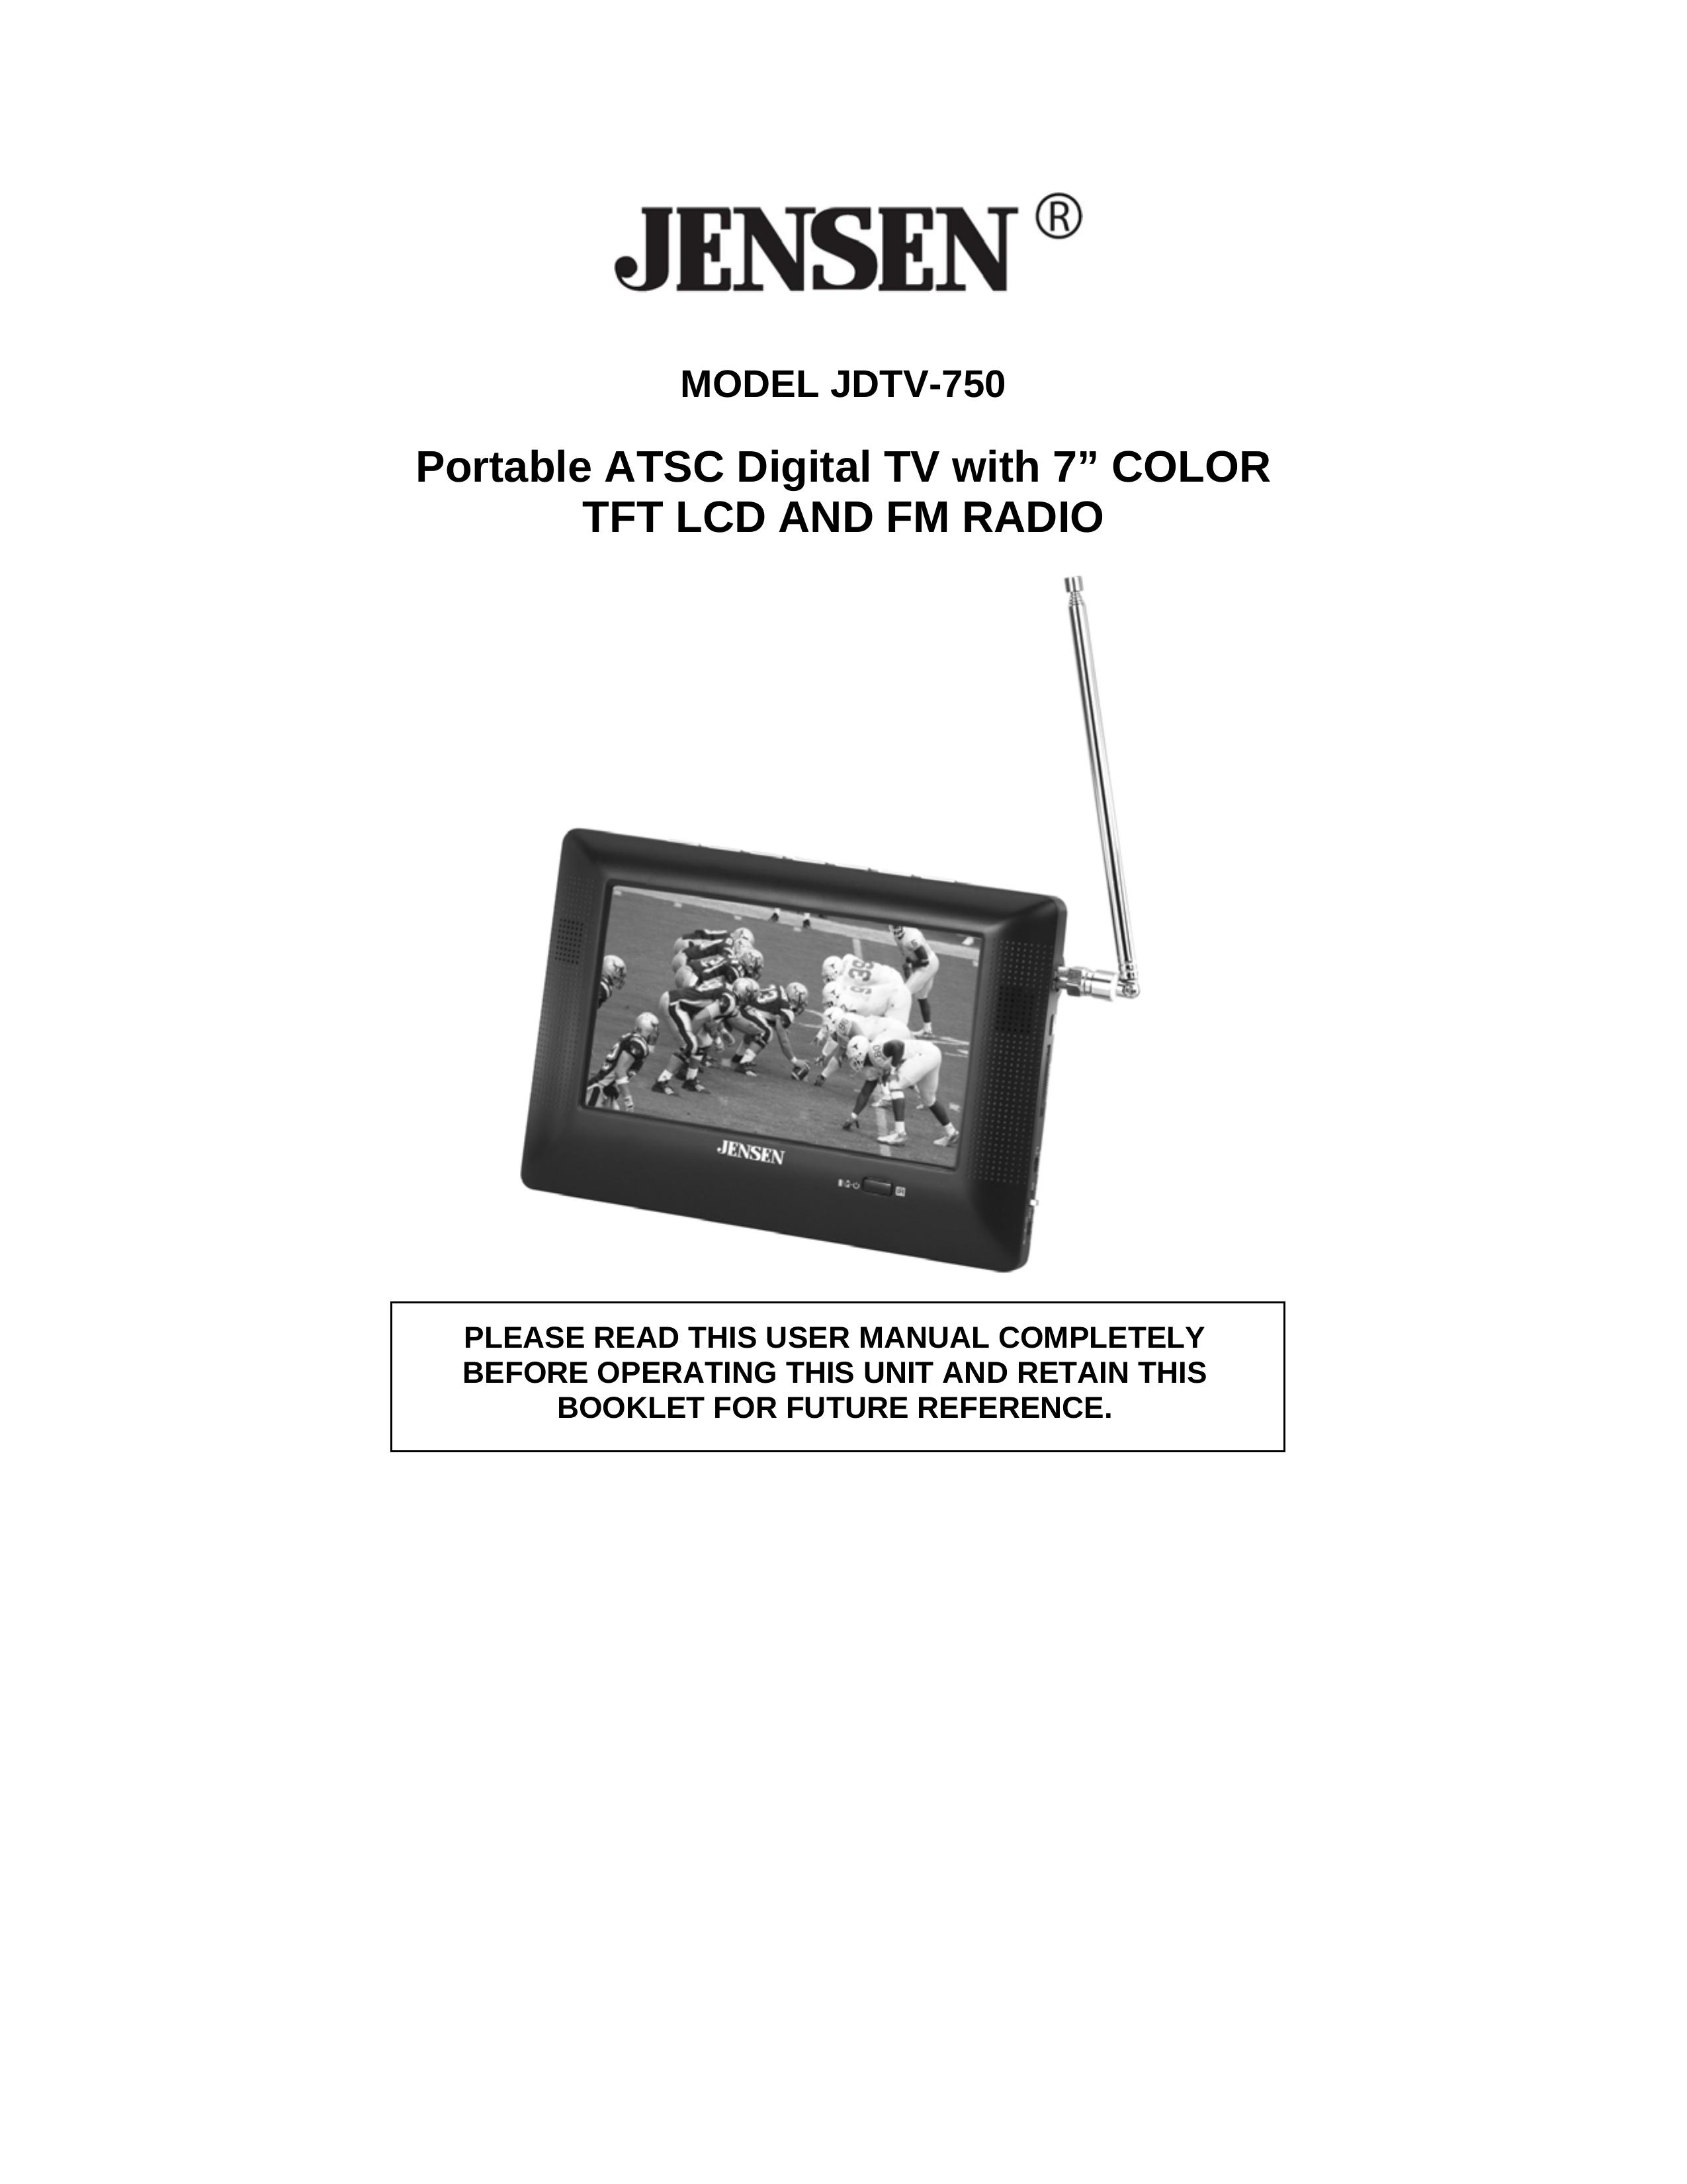 Jensen JDTV-750 Handheld TV User Manual (Page 1)